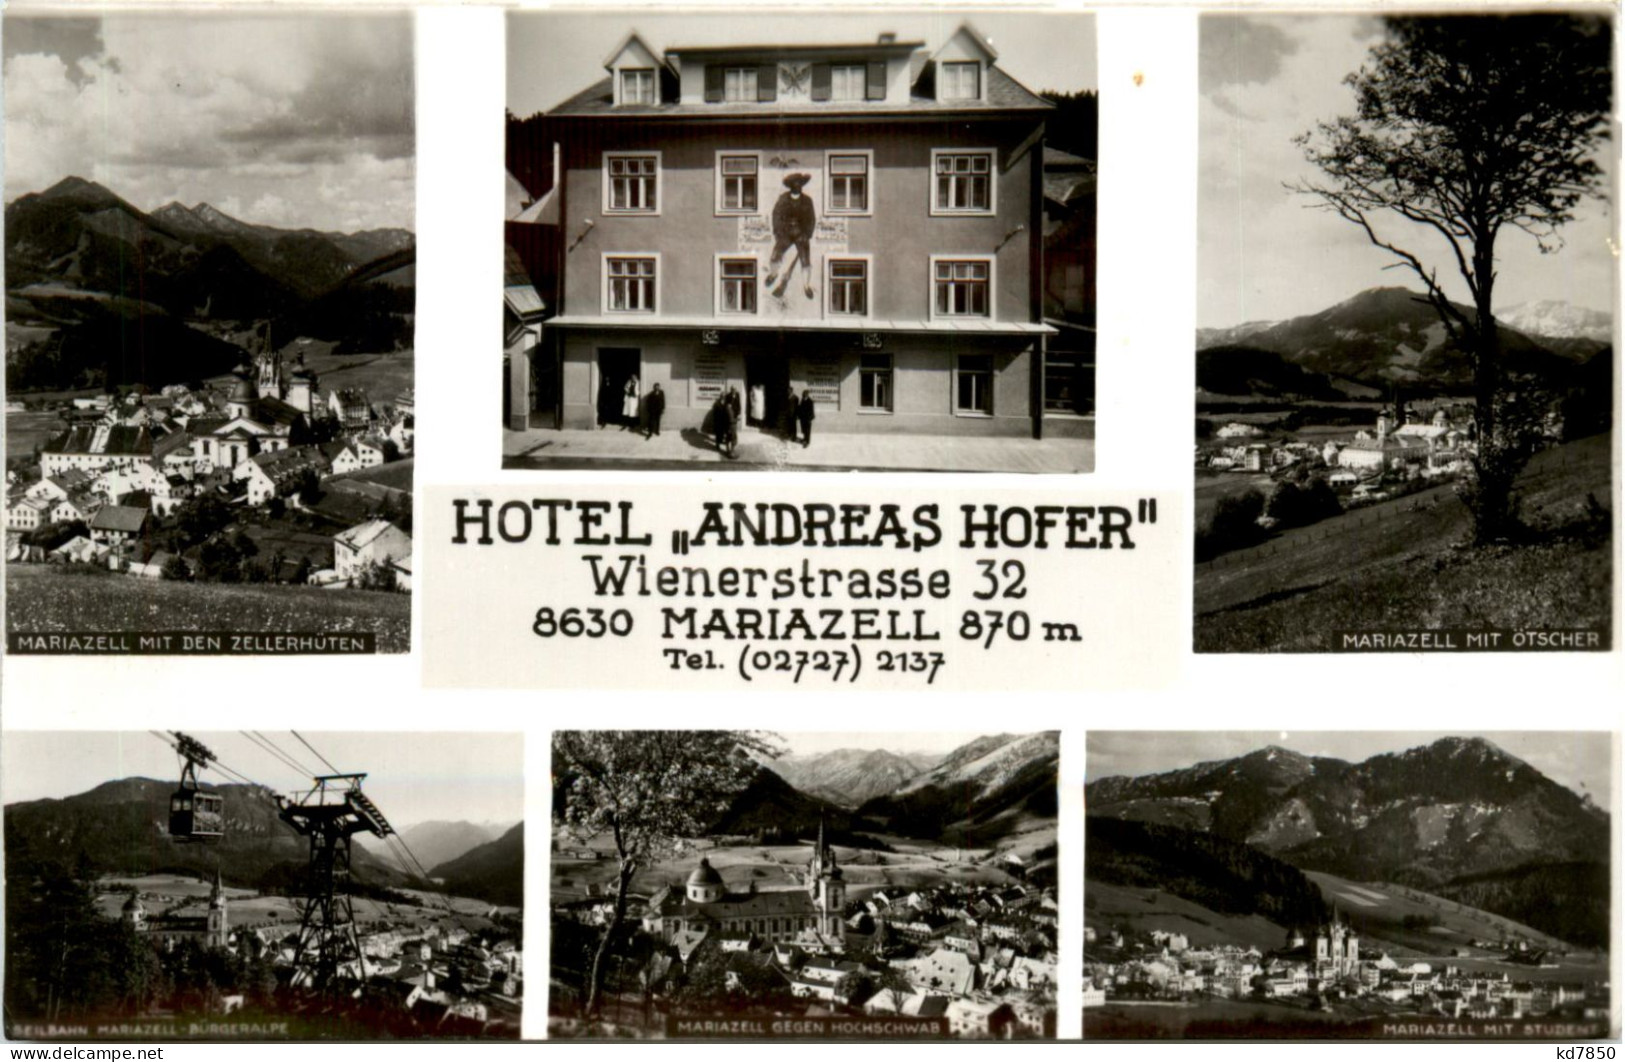 Mariazell, Hotel Andreas Hofer - Mariazell